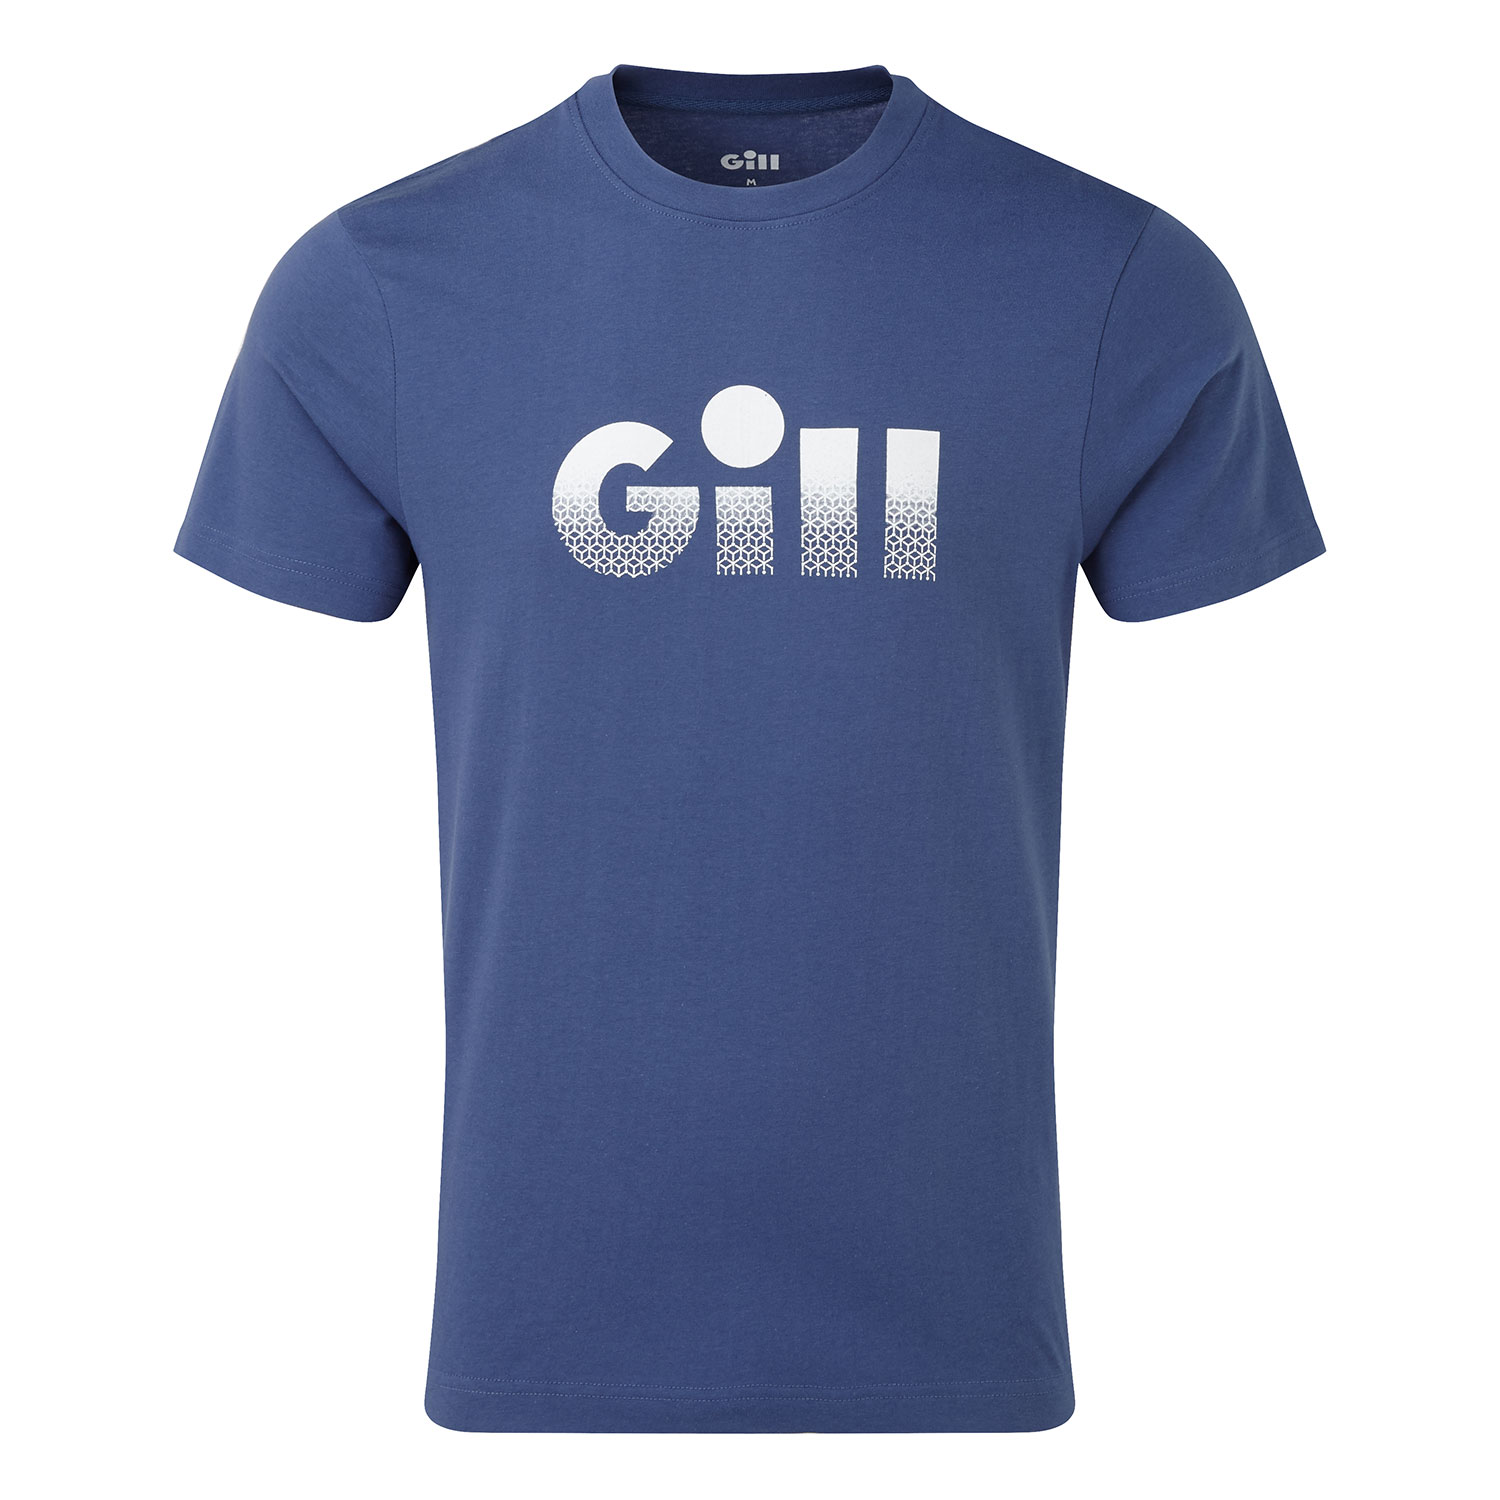 Gill Saltash T-Shirt 2019 - Ocean | Coast Water Sports